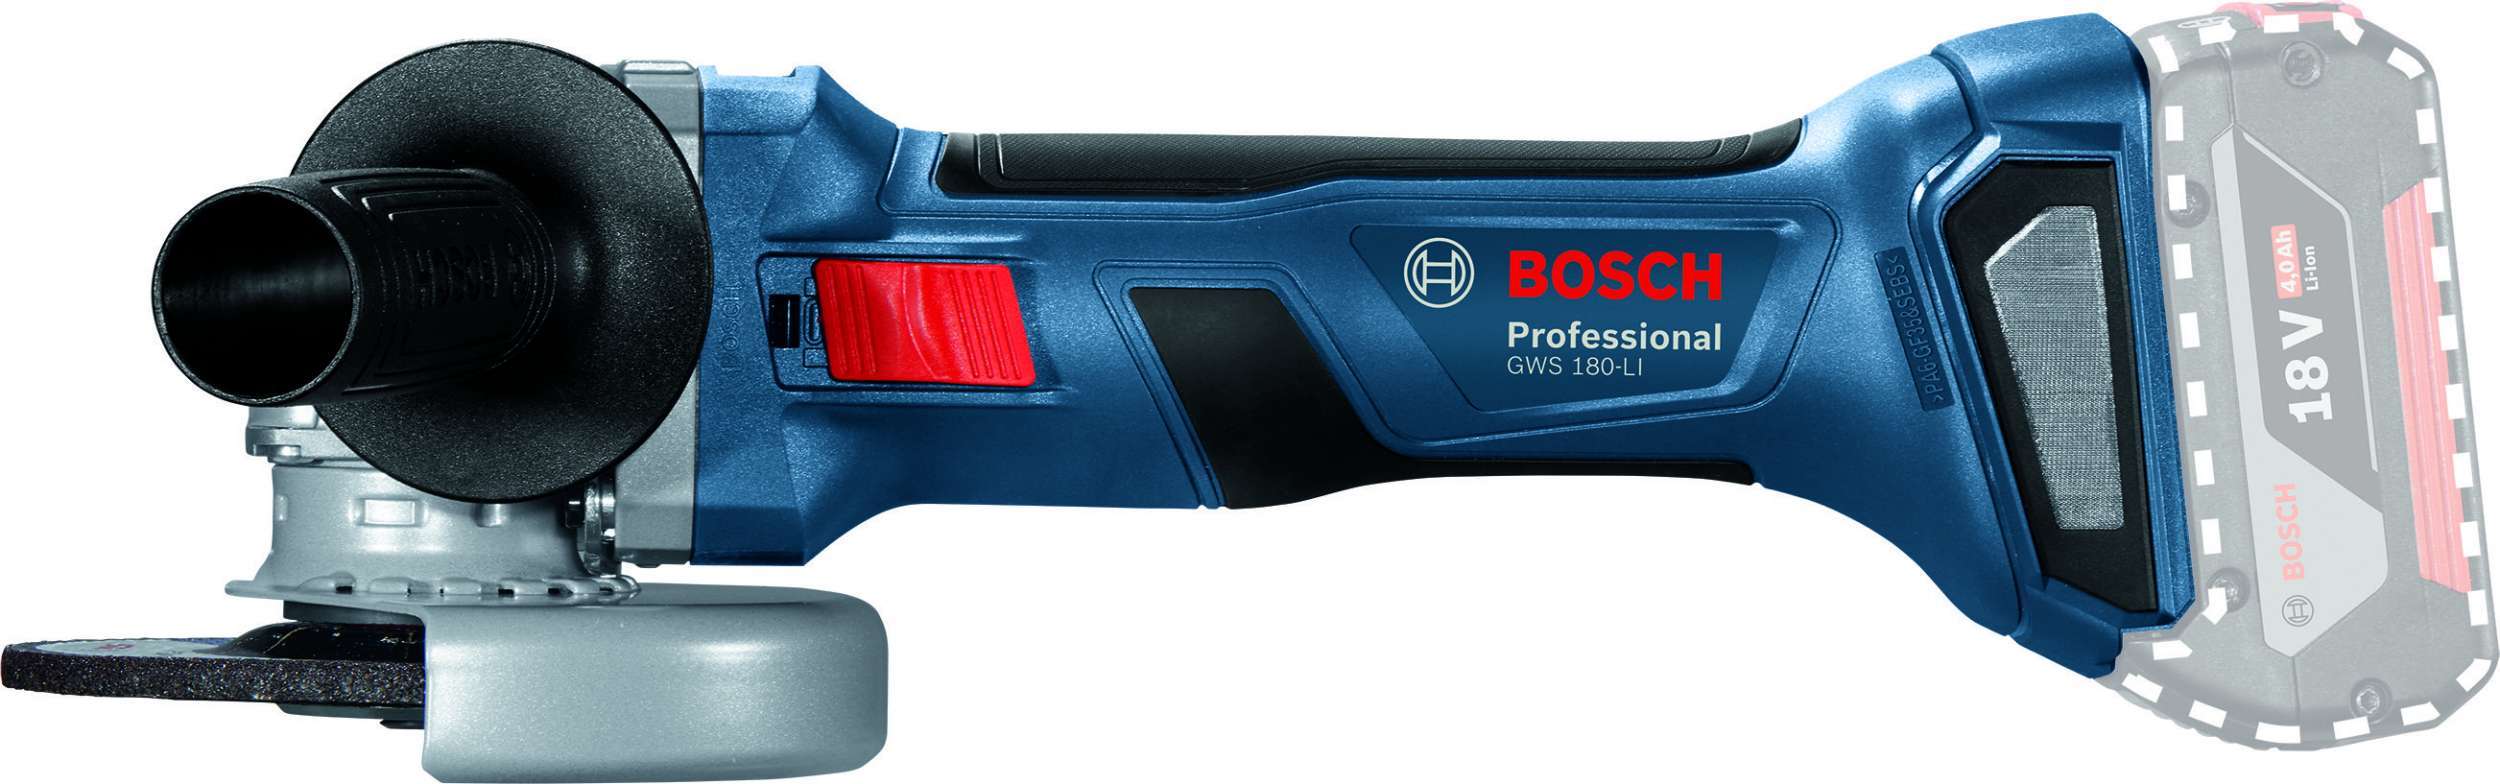 Bosch 3 lü Kampanya GBH 180-LI +GWS 18-125 V-LI+GSR 18V-60 C